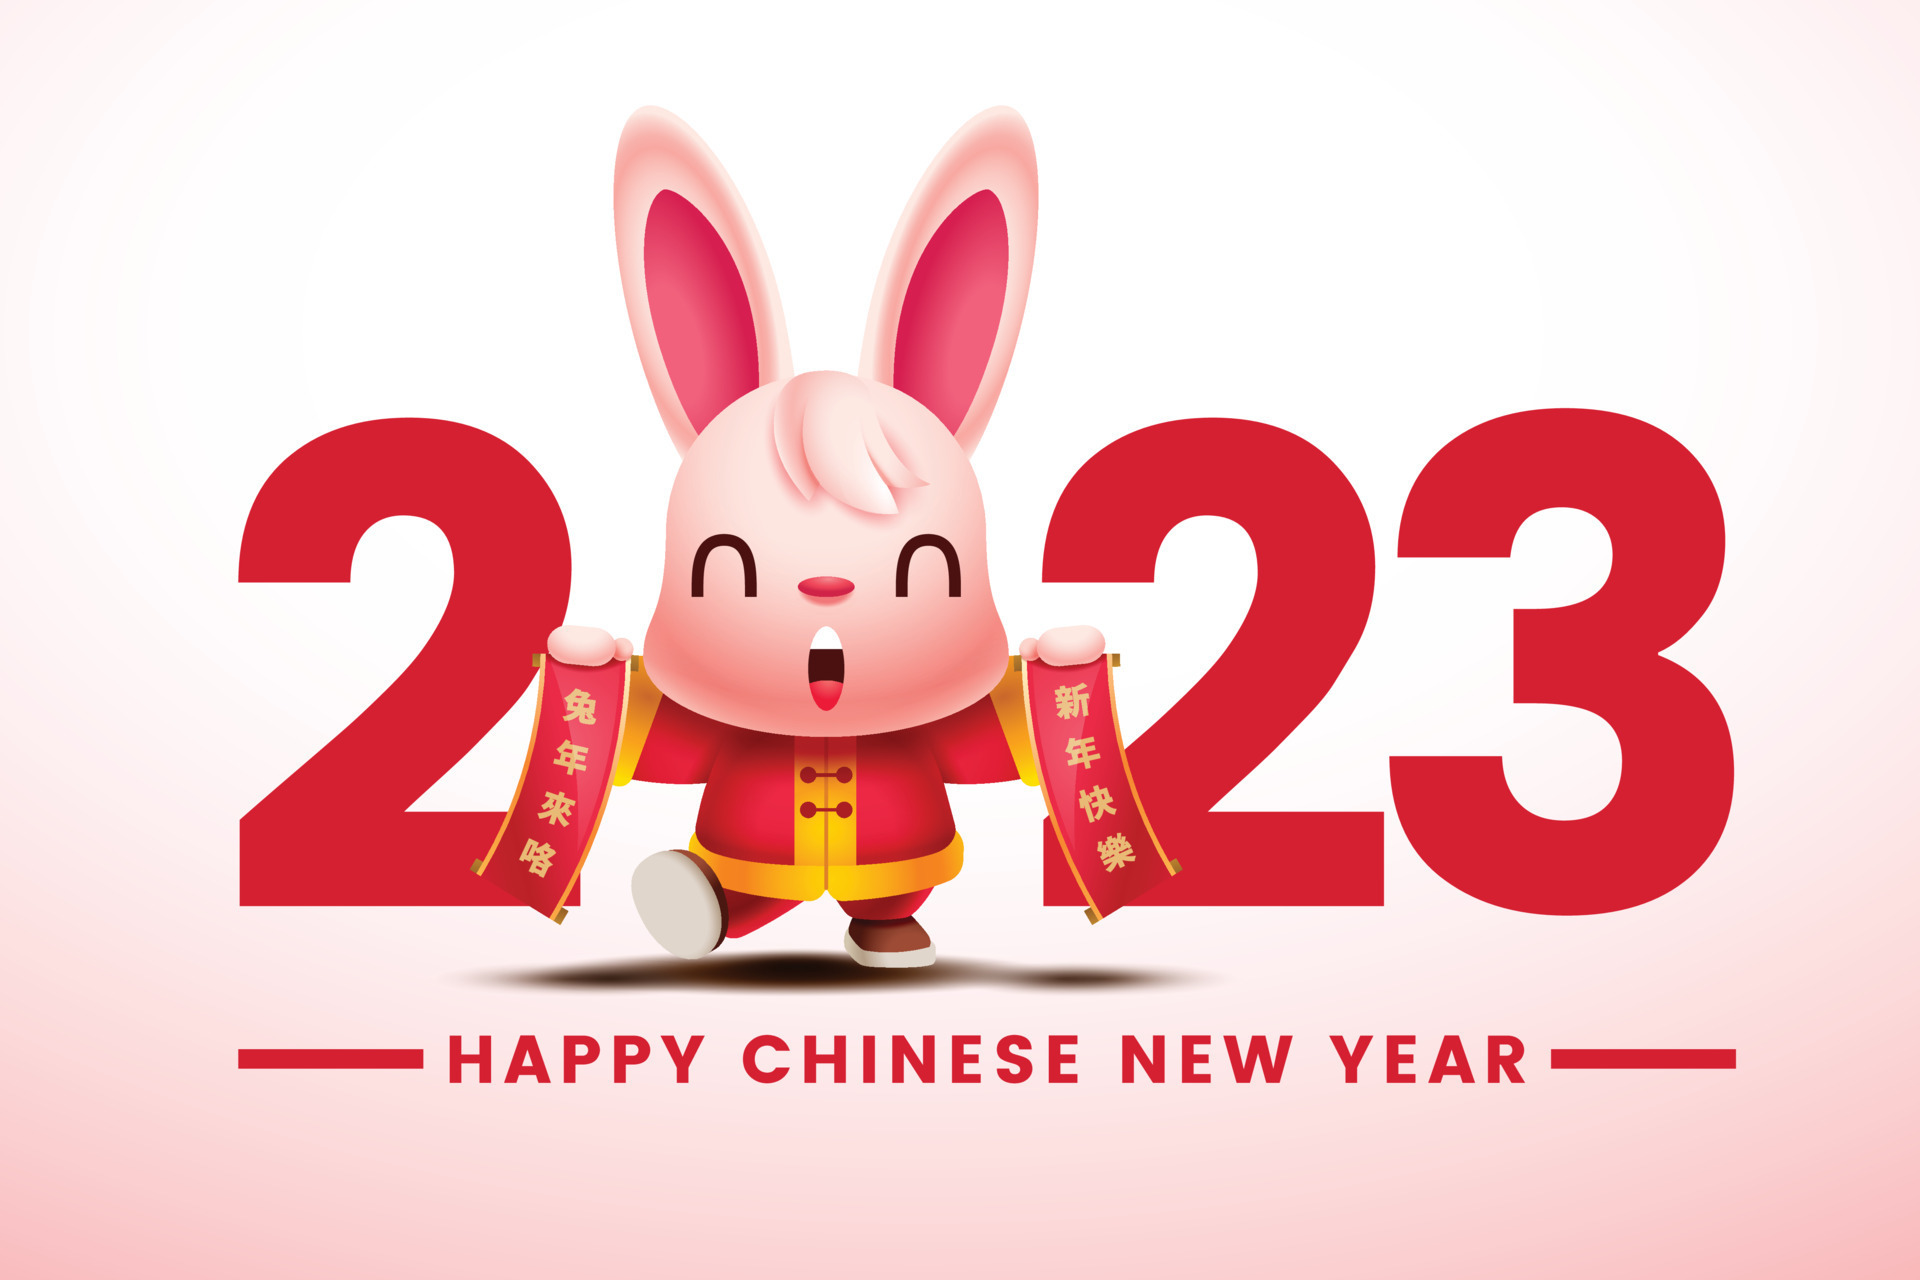 chinese-new-year-2023-greeting-card-cartoon-cute-rabbit-holding